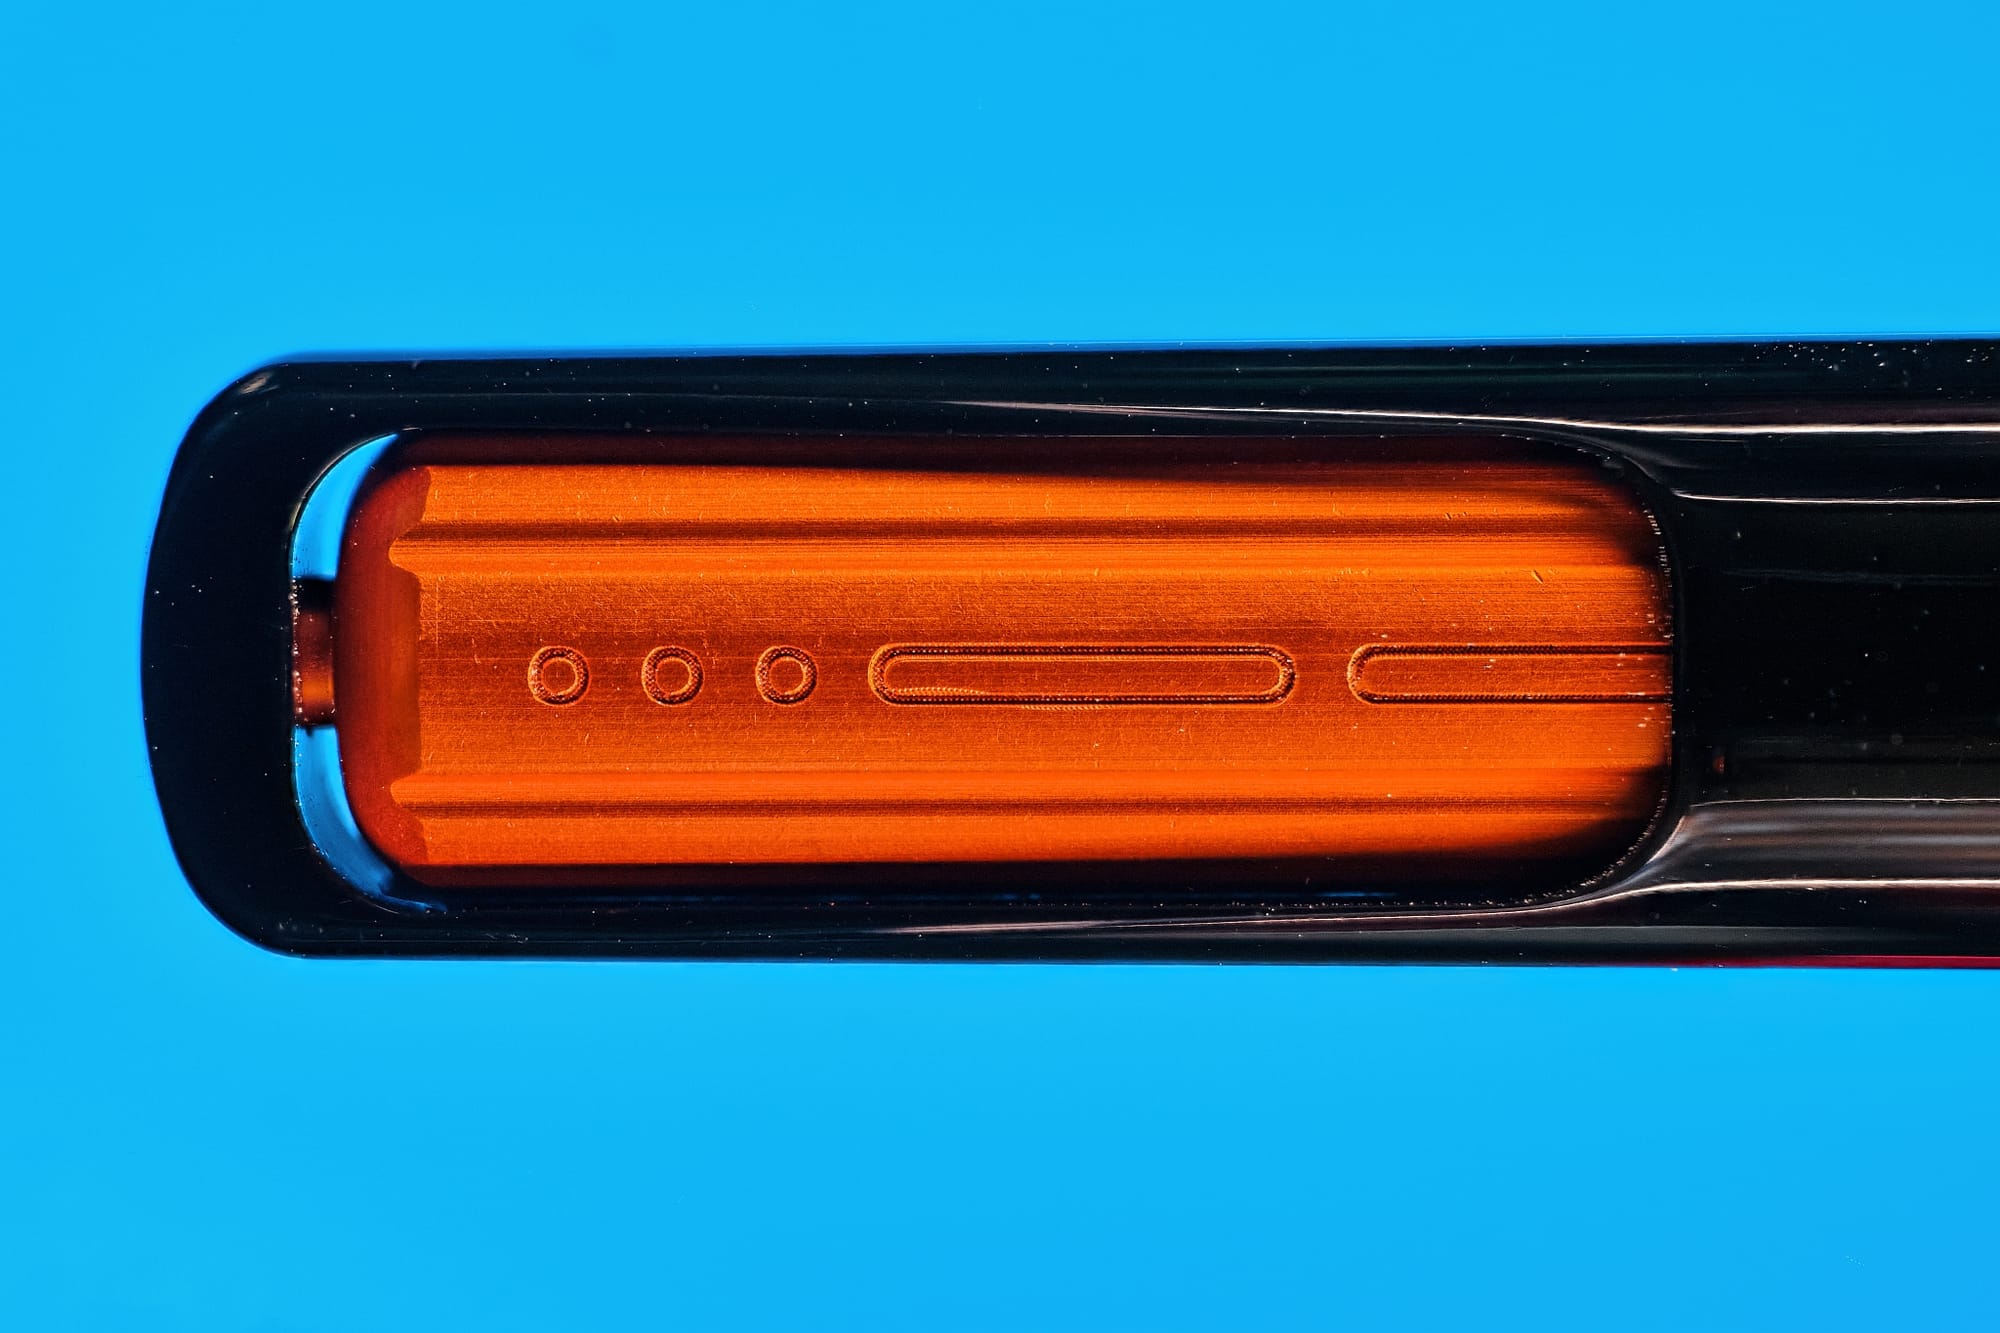 Close up of the Endless Captiva's orange piston knob